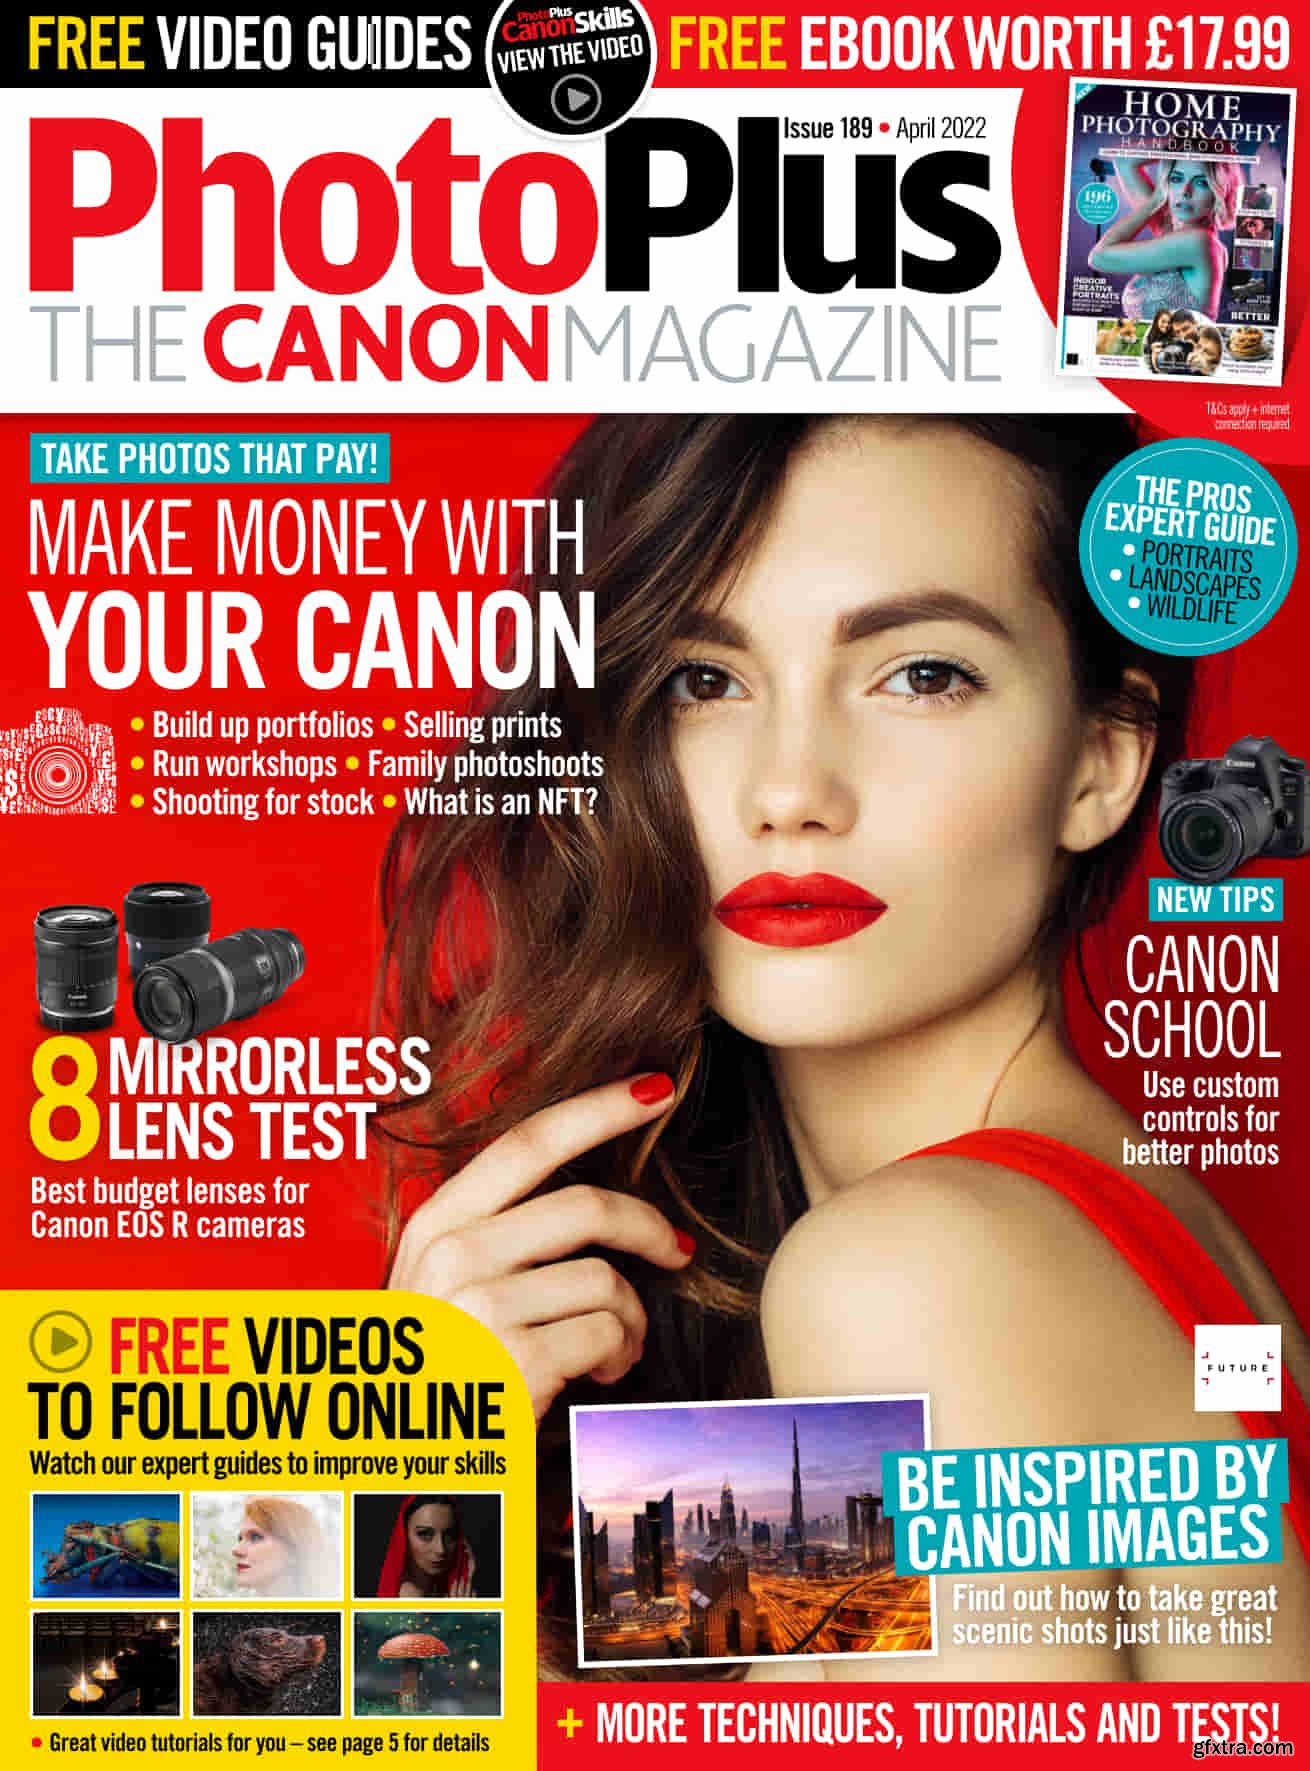 PhotoPlus The Canon Magazine Issue 189, April 2022 » GFxtra